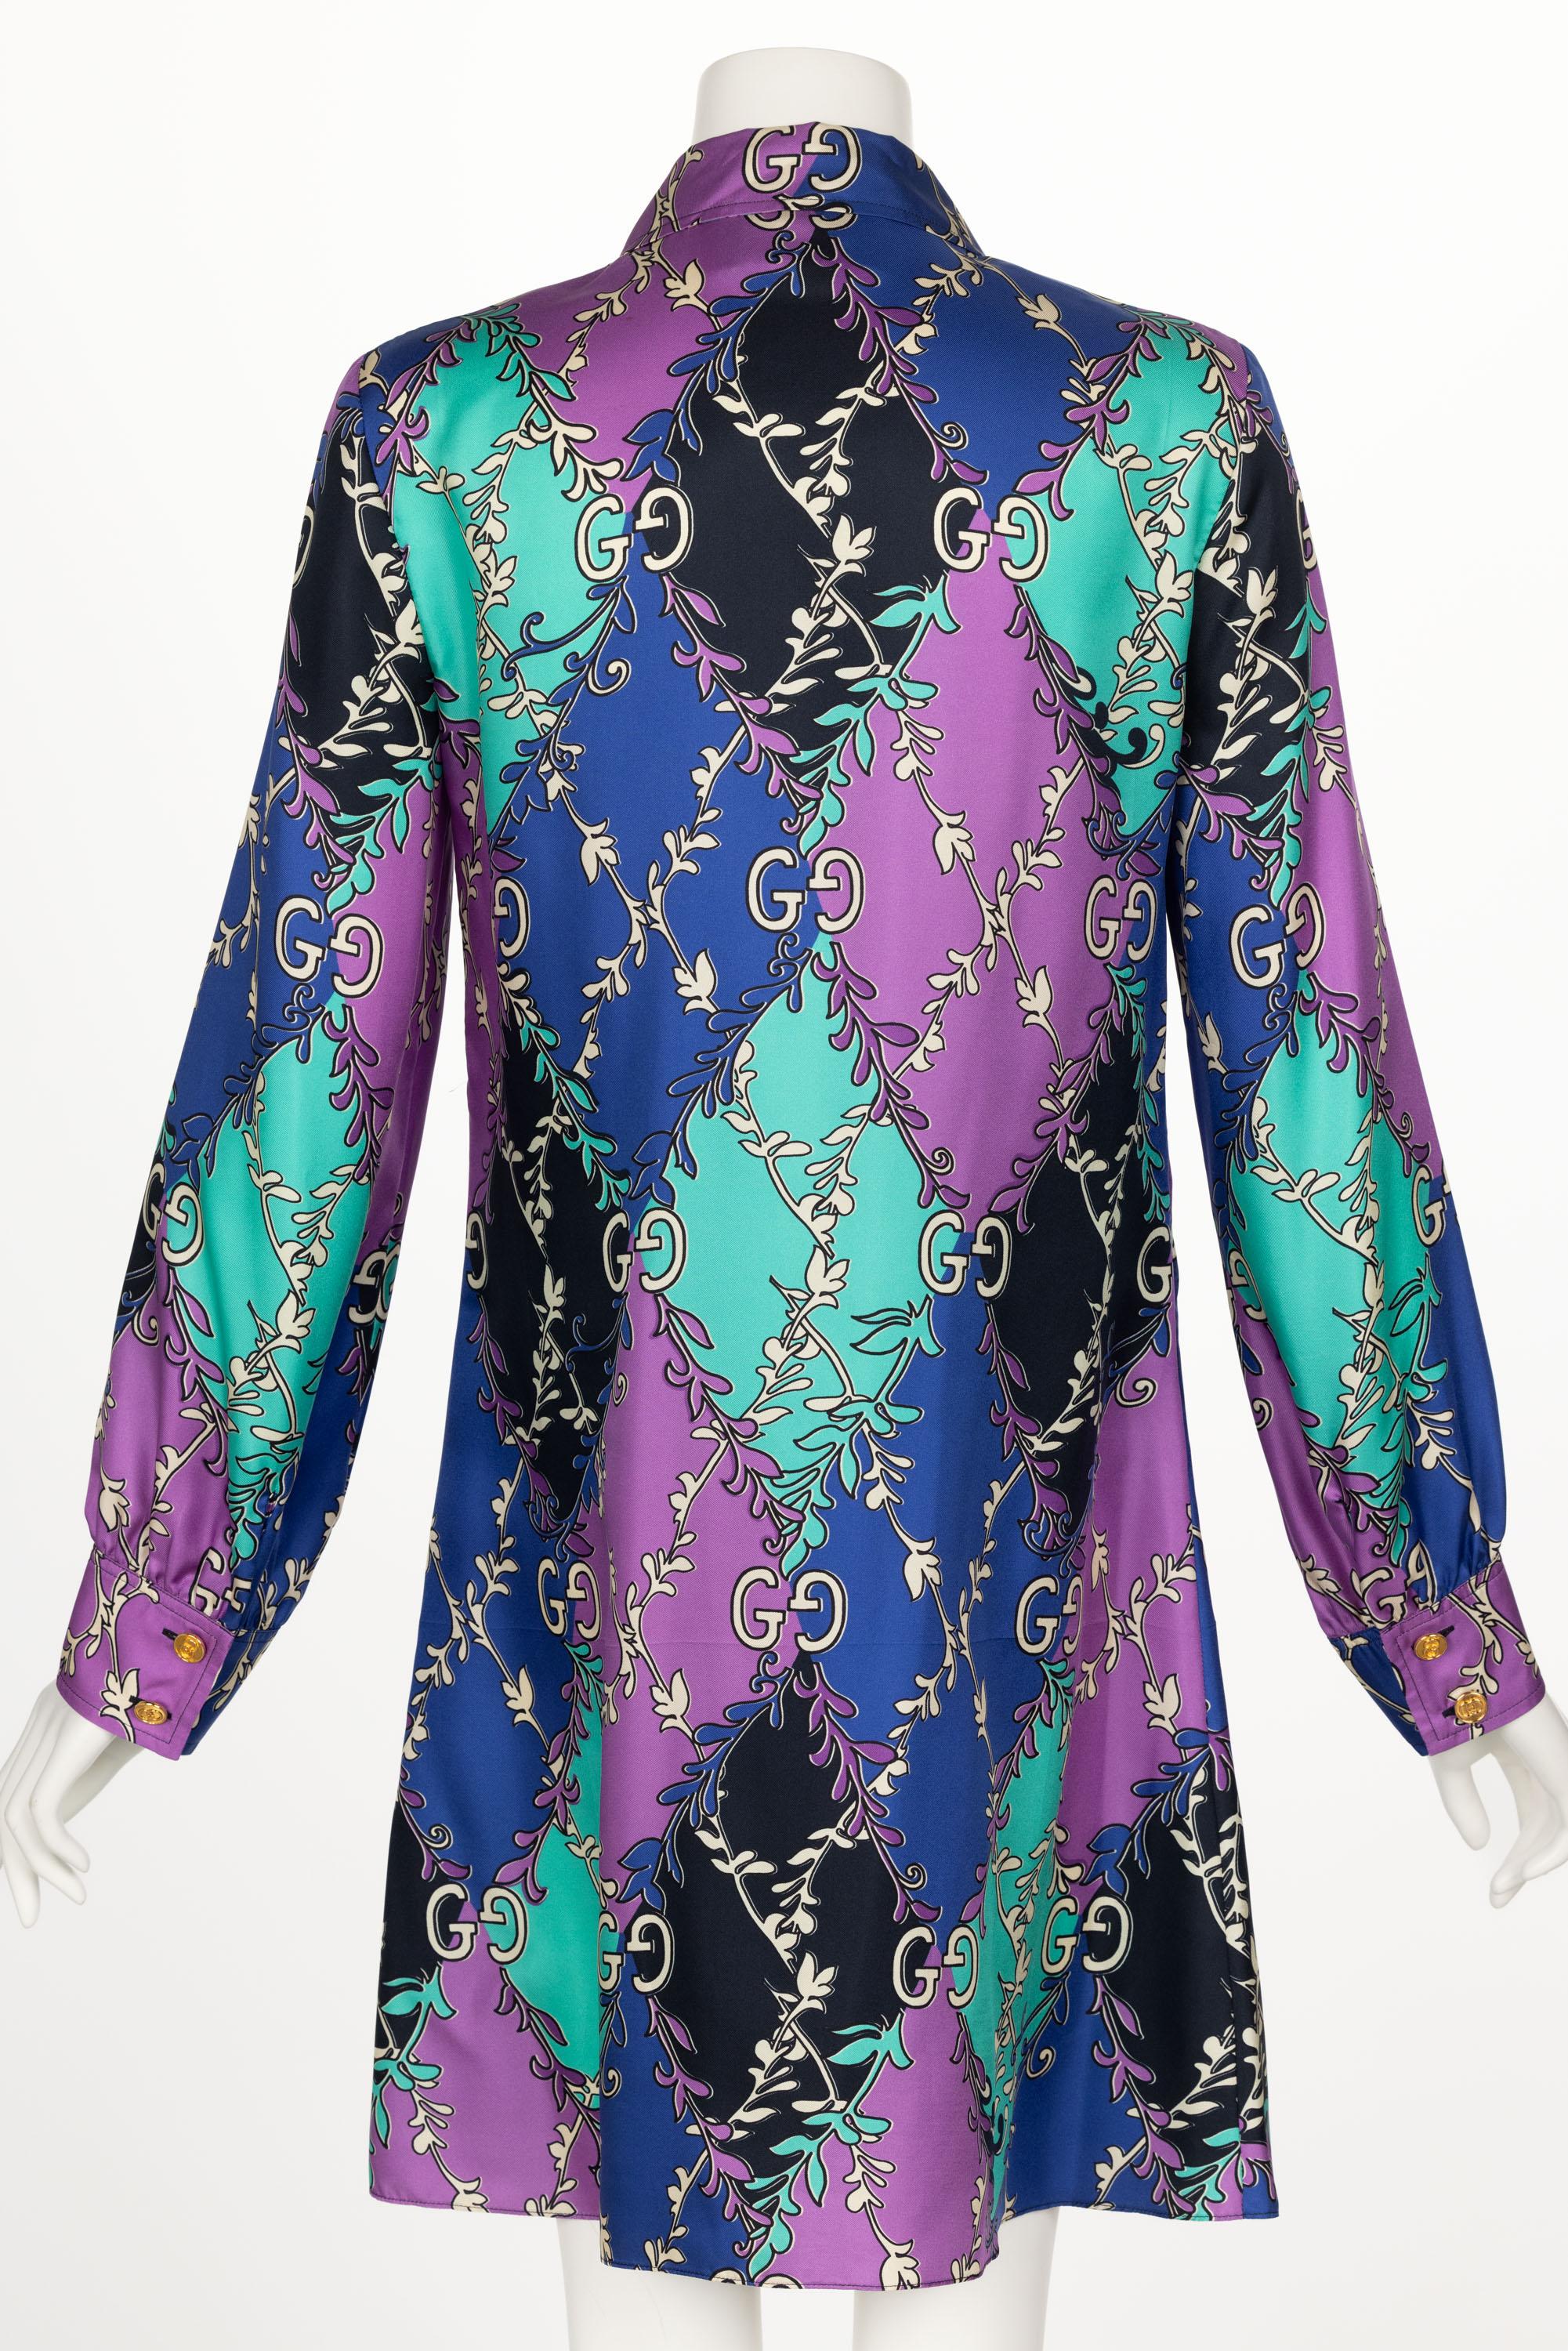 Gucci GG Rhombus Print Long Sleeve Silk Purple Print Shirtdress Resort 2020 For Sale 1